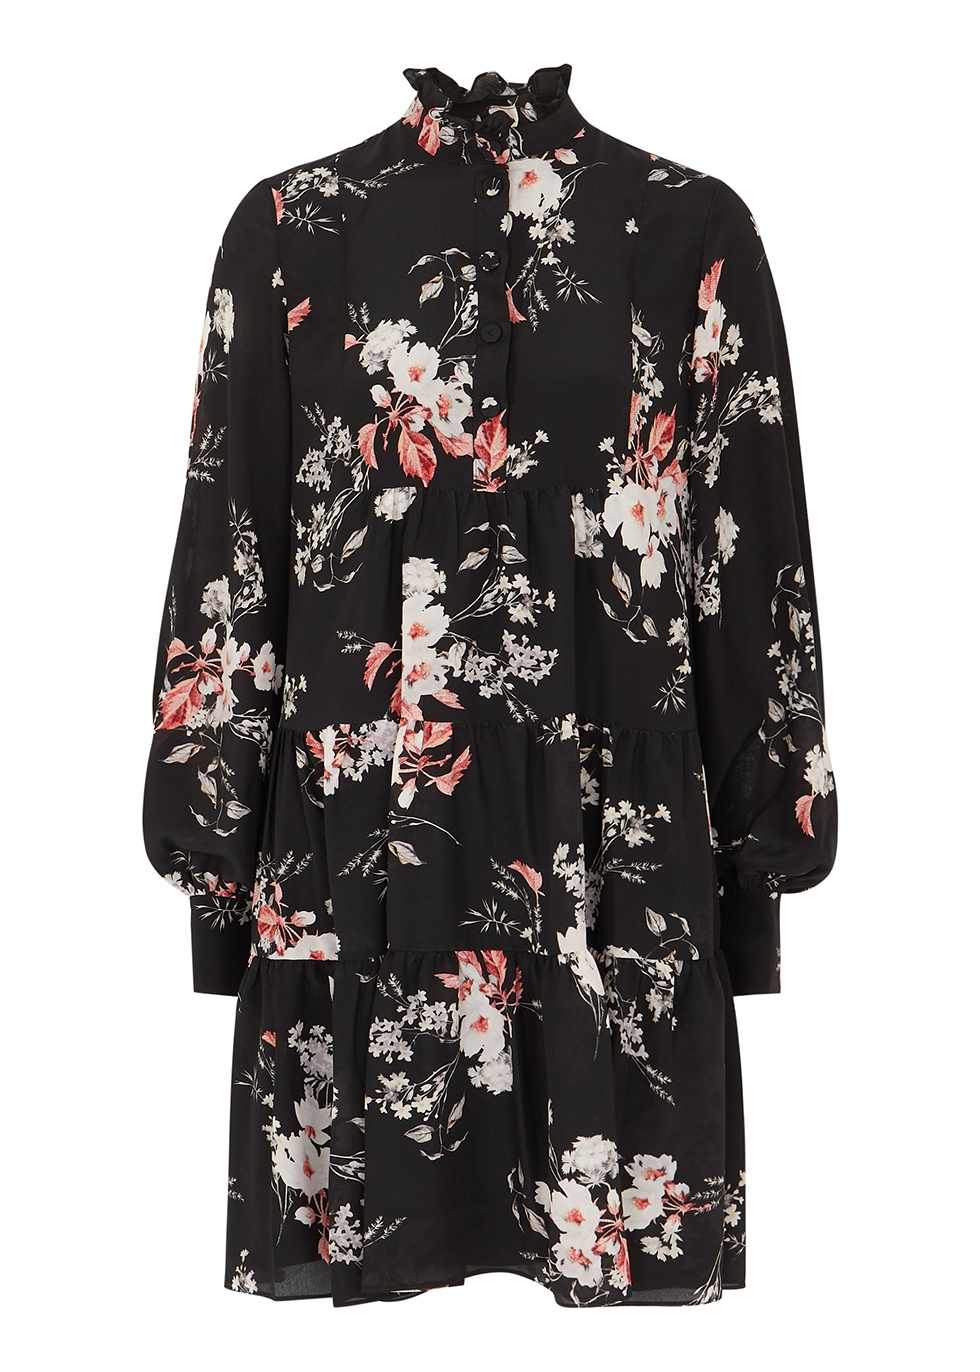 Erdem Karla floral-print silk crepe de chine shirt dress